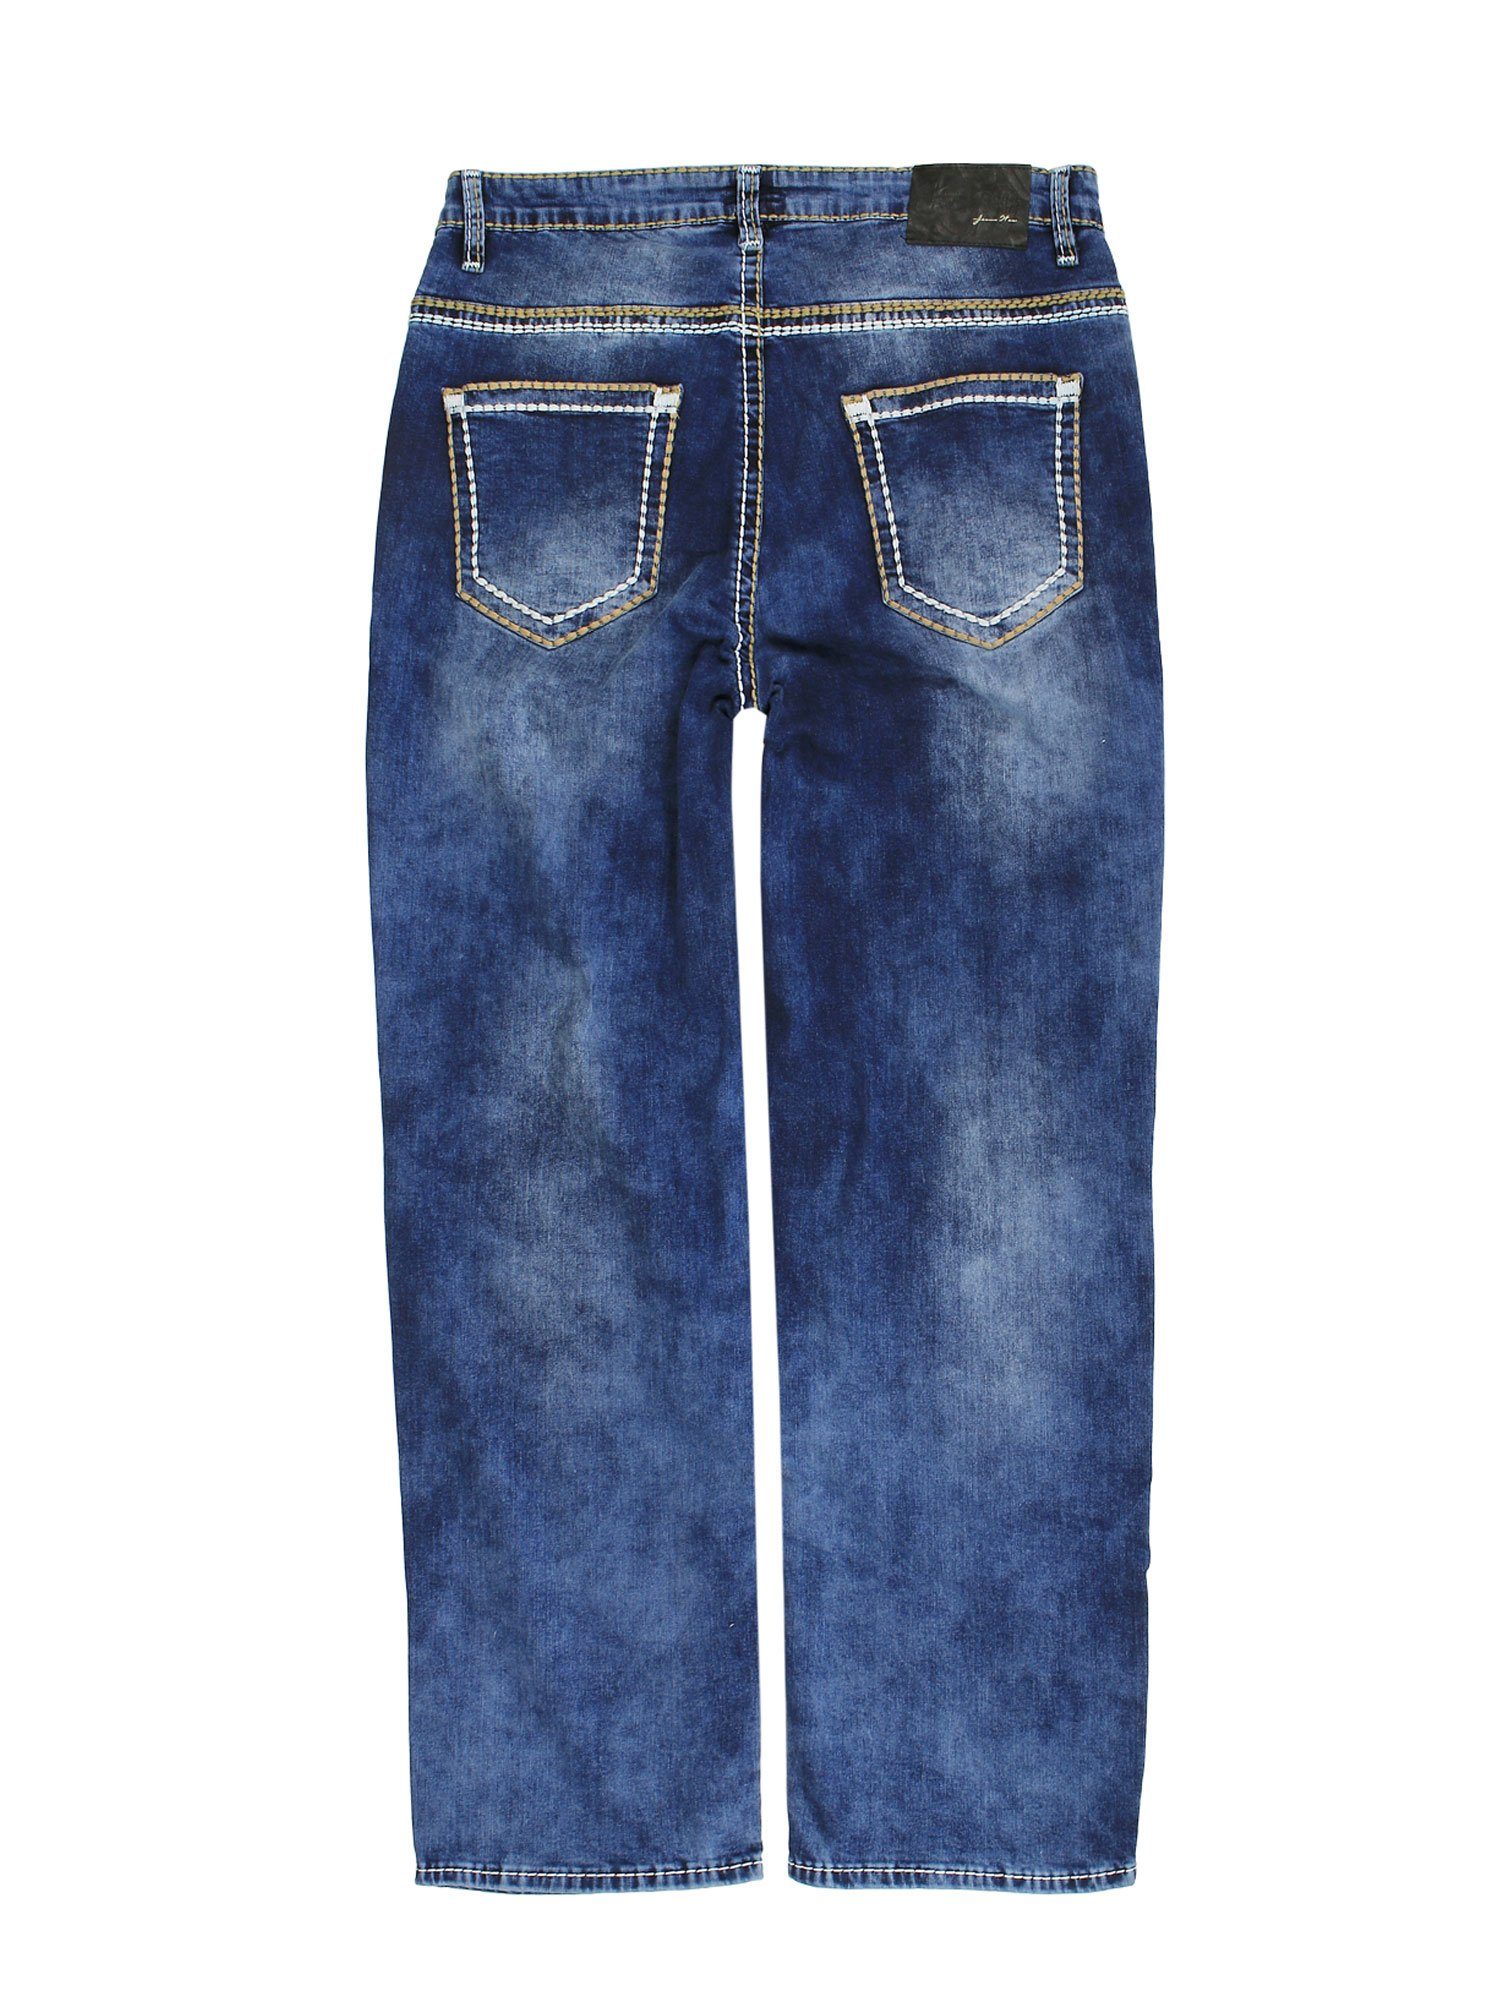 LV-503 mit Übergrößen Lavecchia stoneblau Jeanshose & Comfort-fit-Jeans Herren Naht dicker Stretch Elasthan